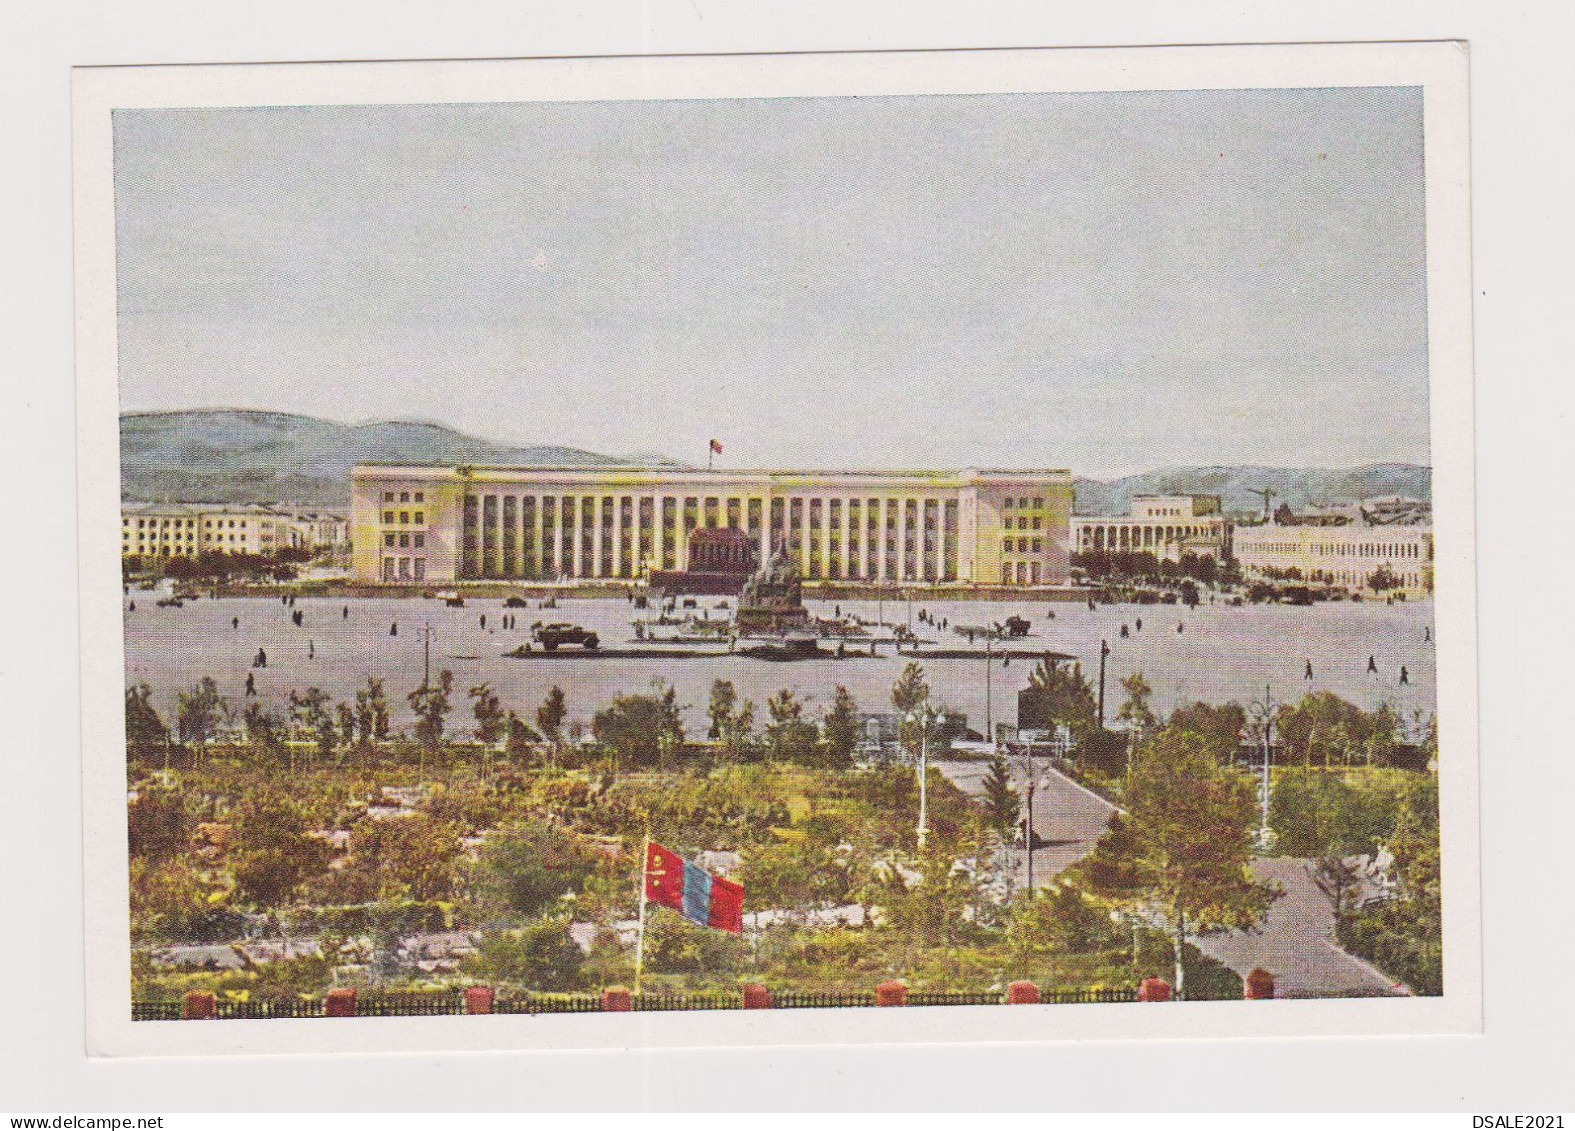 Mongolia Mongolei Mongolie Ulaanbaatar Sukhe-Bator Square With Mausoleum View 1960s Soviet USSR Photo Postcard (66627) - Mongolei